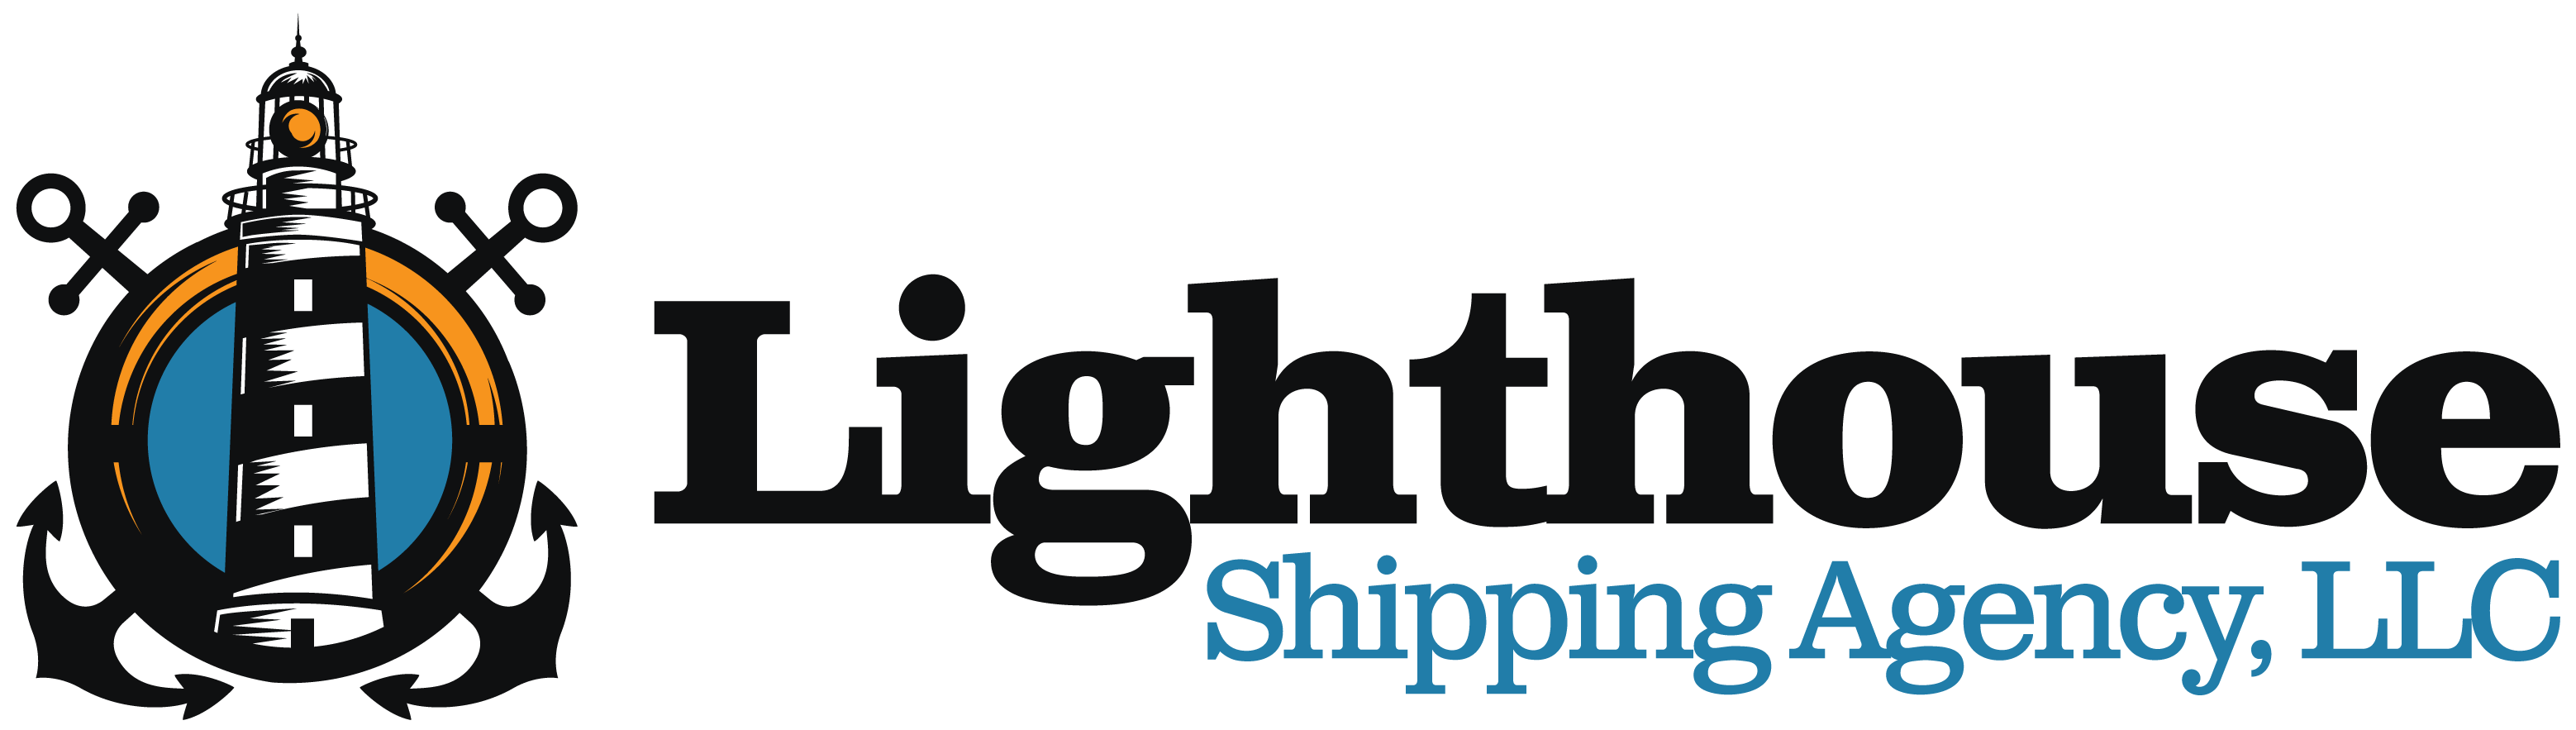 Lighthouse Shipping Agency Inc.